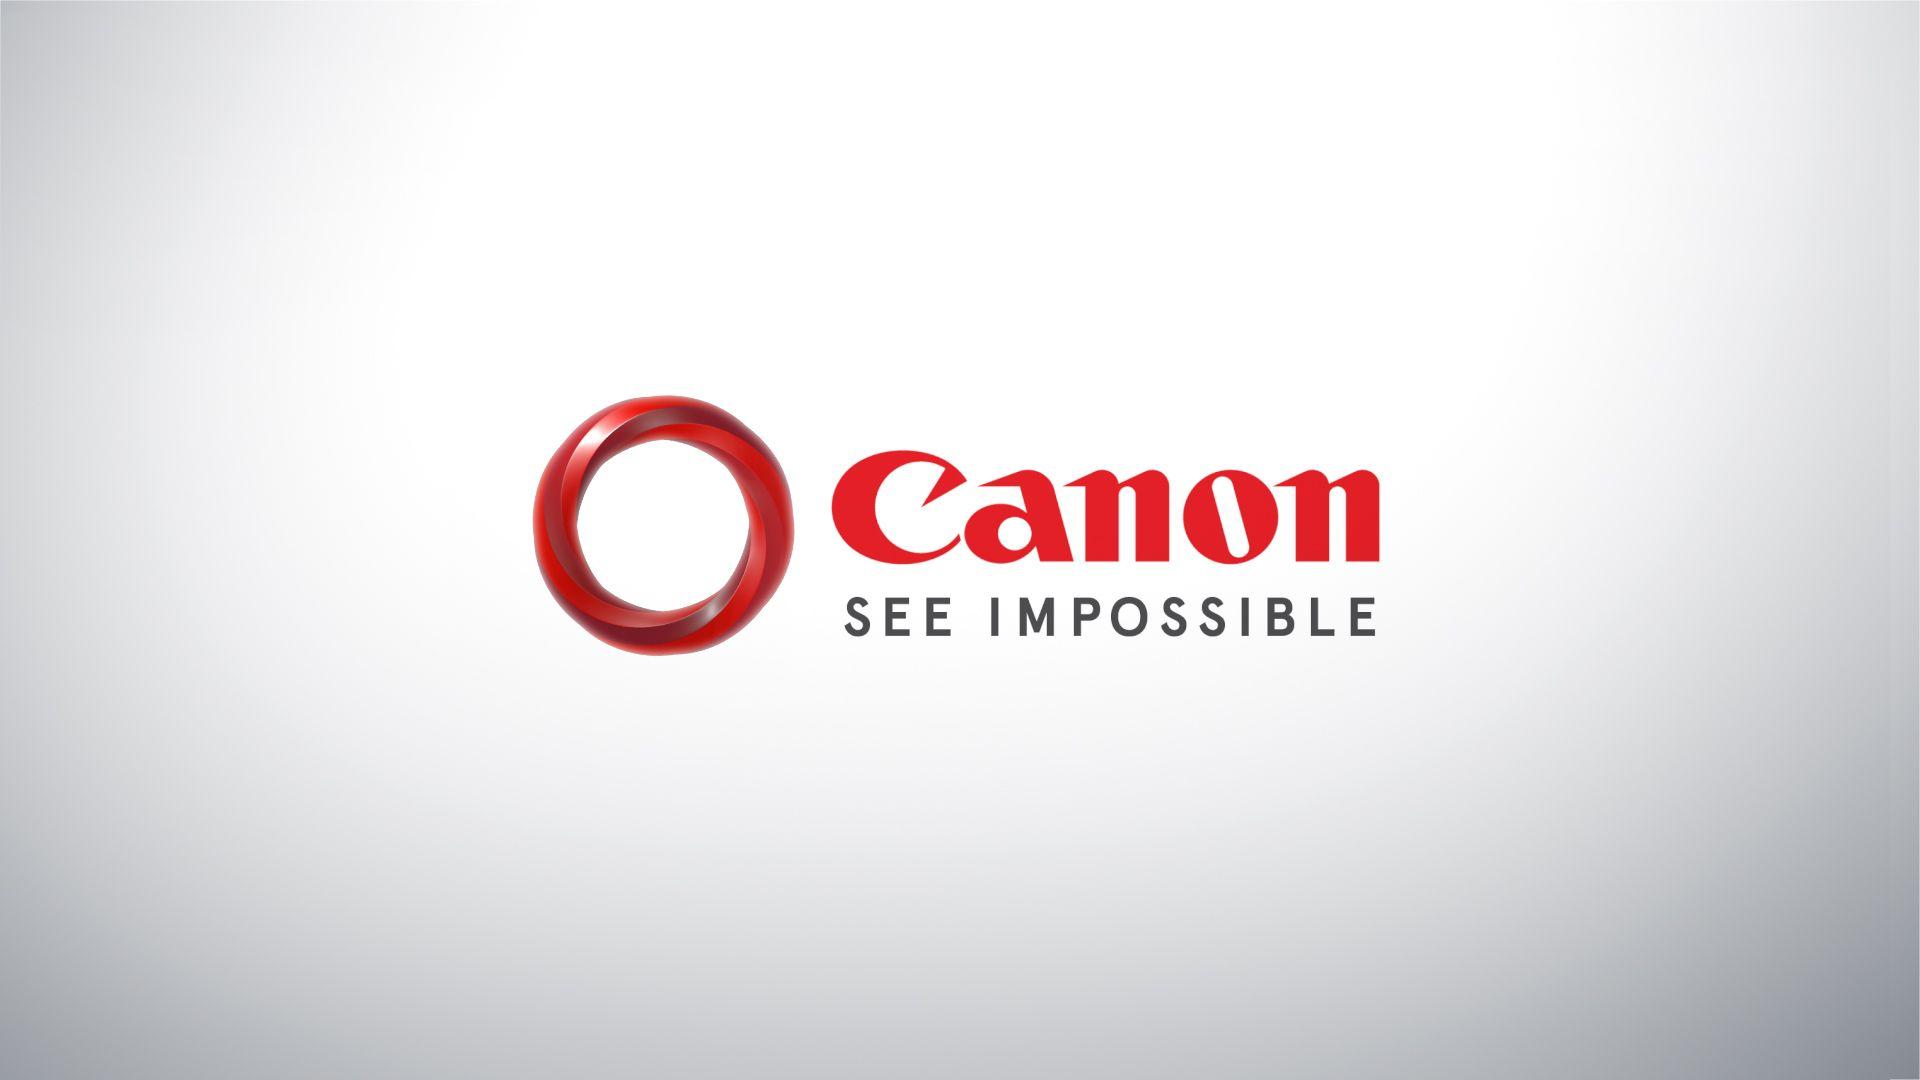 Canon See Impossible Logo - Canon HD Wallpaper